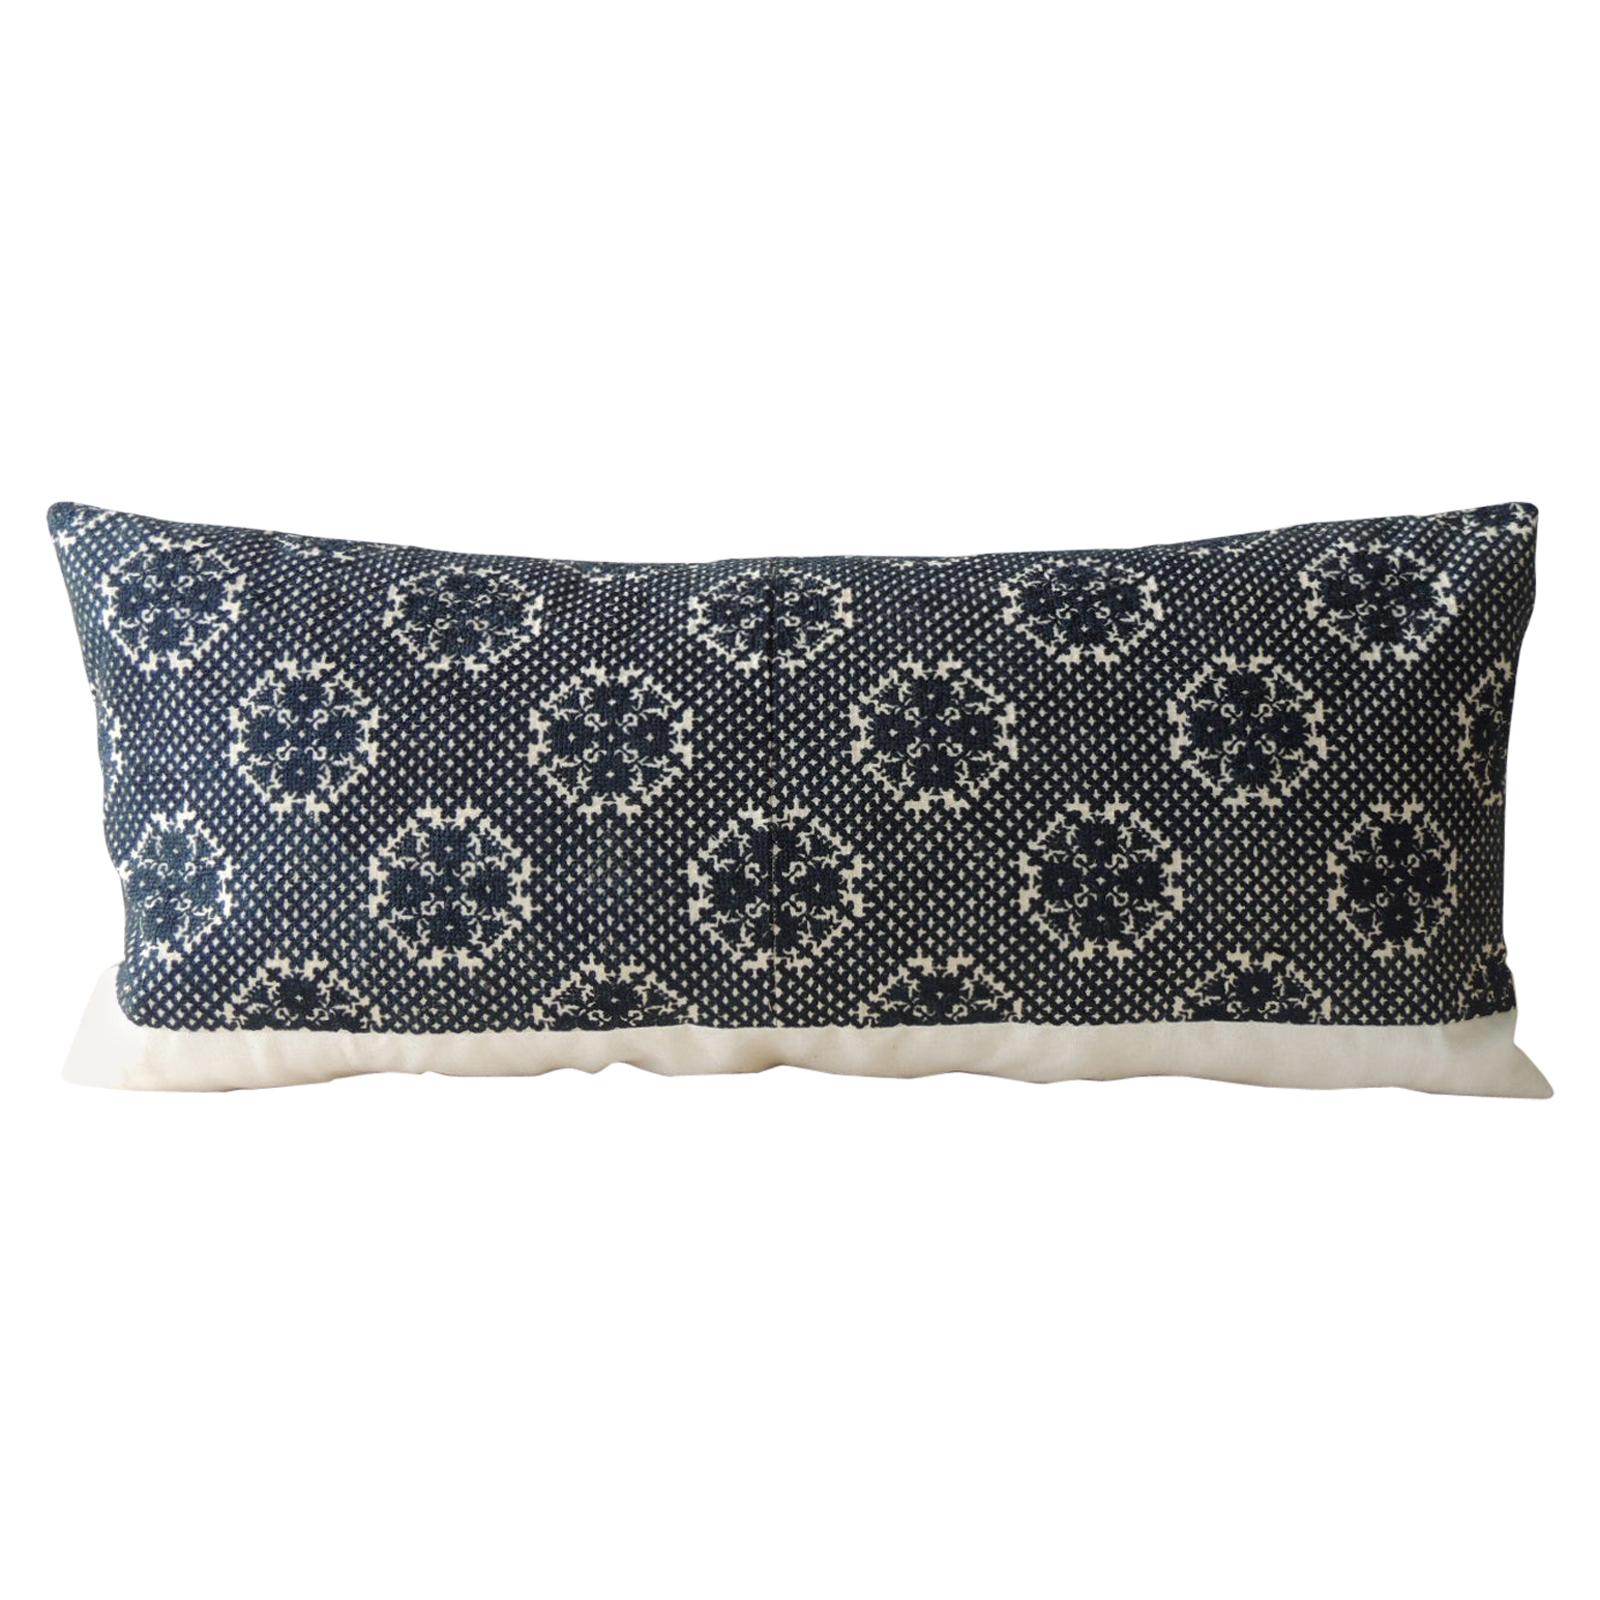 Dark Indigo Embroidery Fez Antique Textile Bolster Decorative Pillow